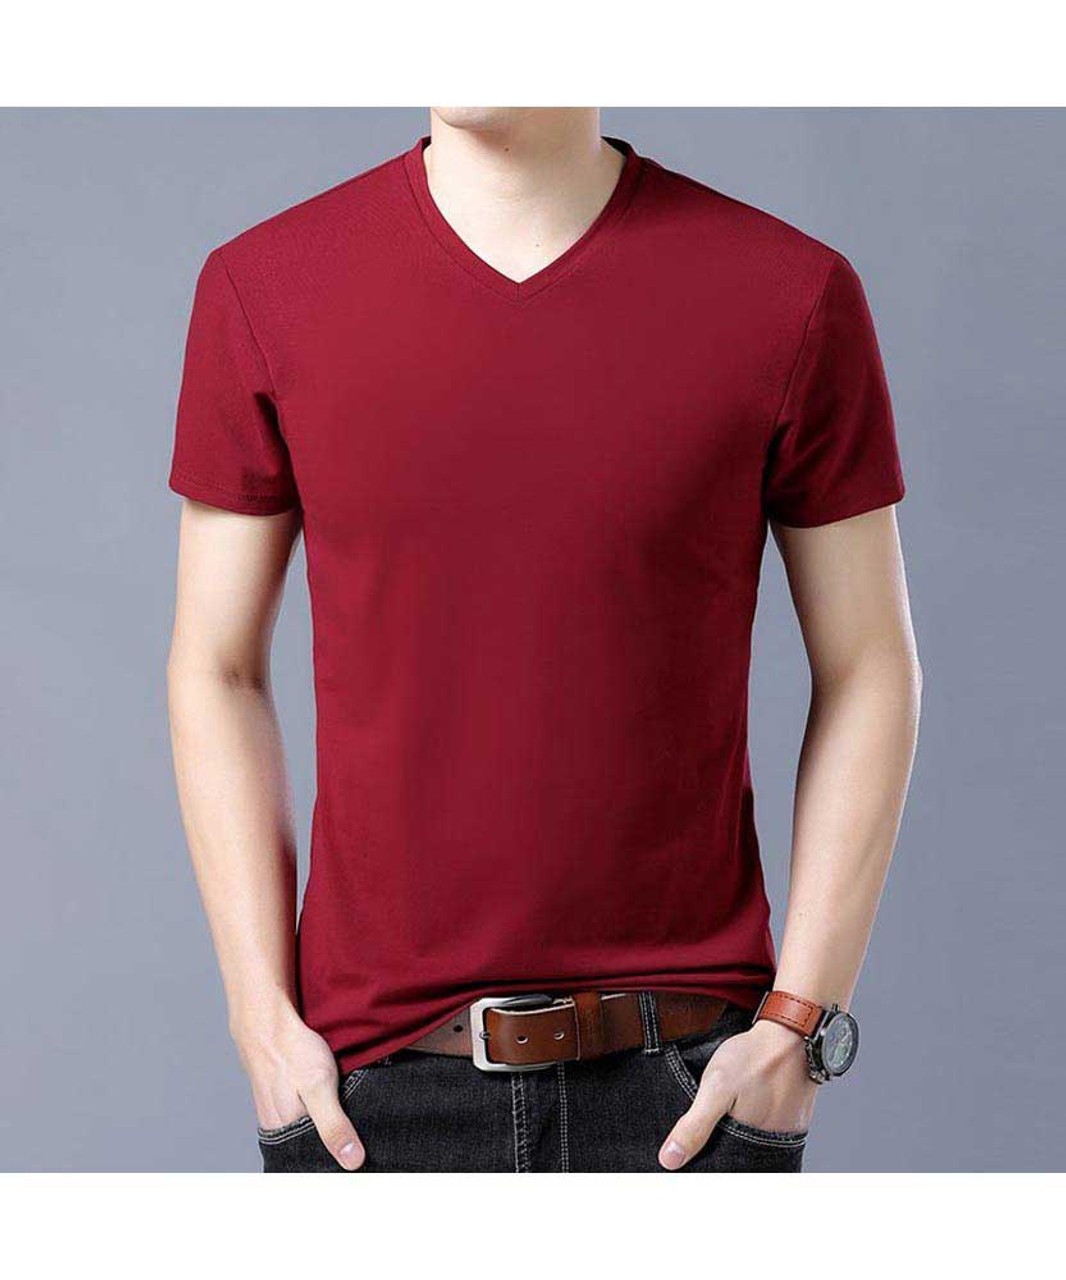 red t shirt online